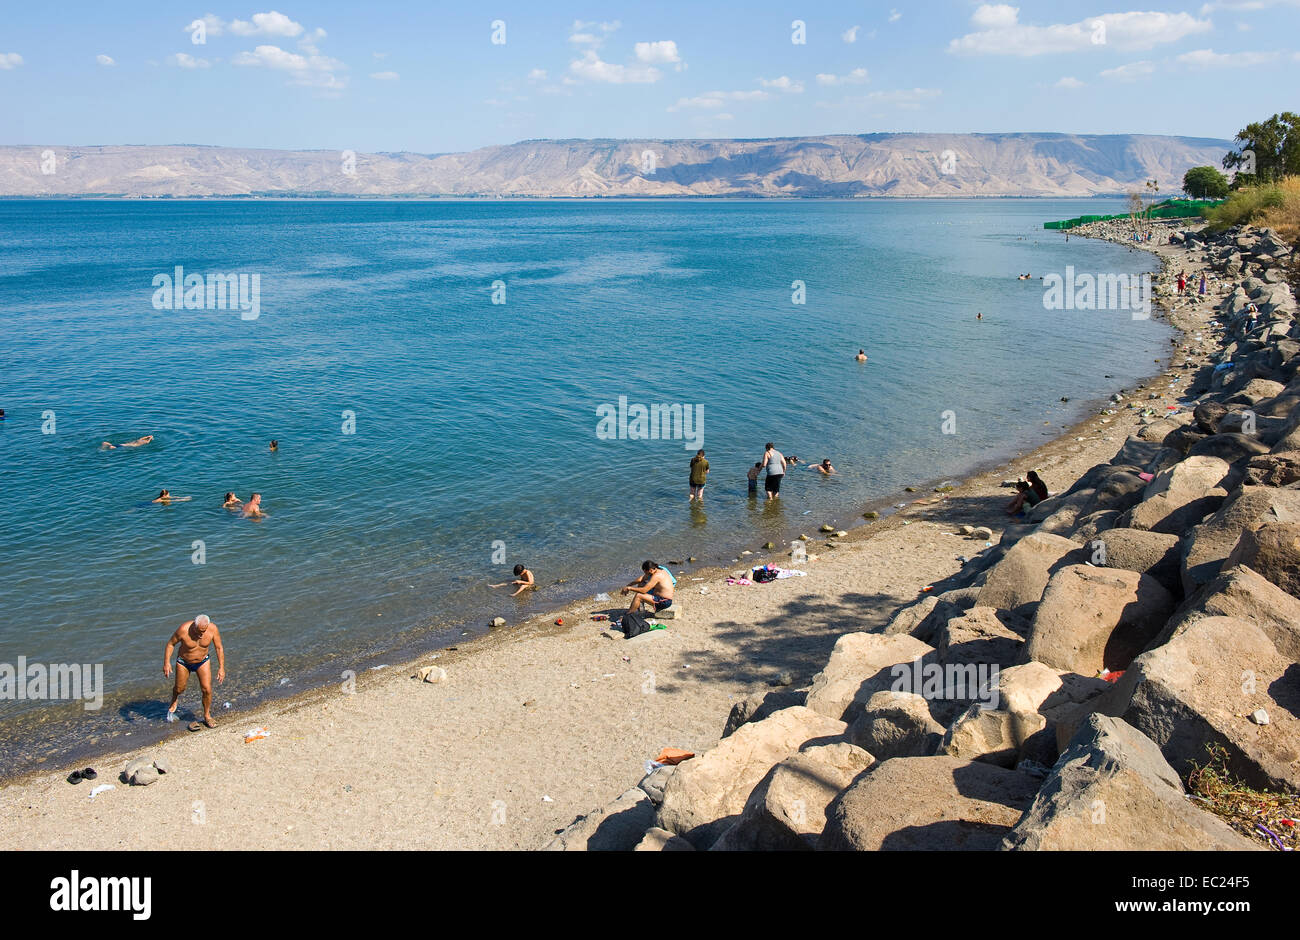 Les gens nagent dans la mer de Galilée, au sud de Tibériade Banque D'Images